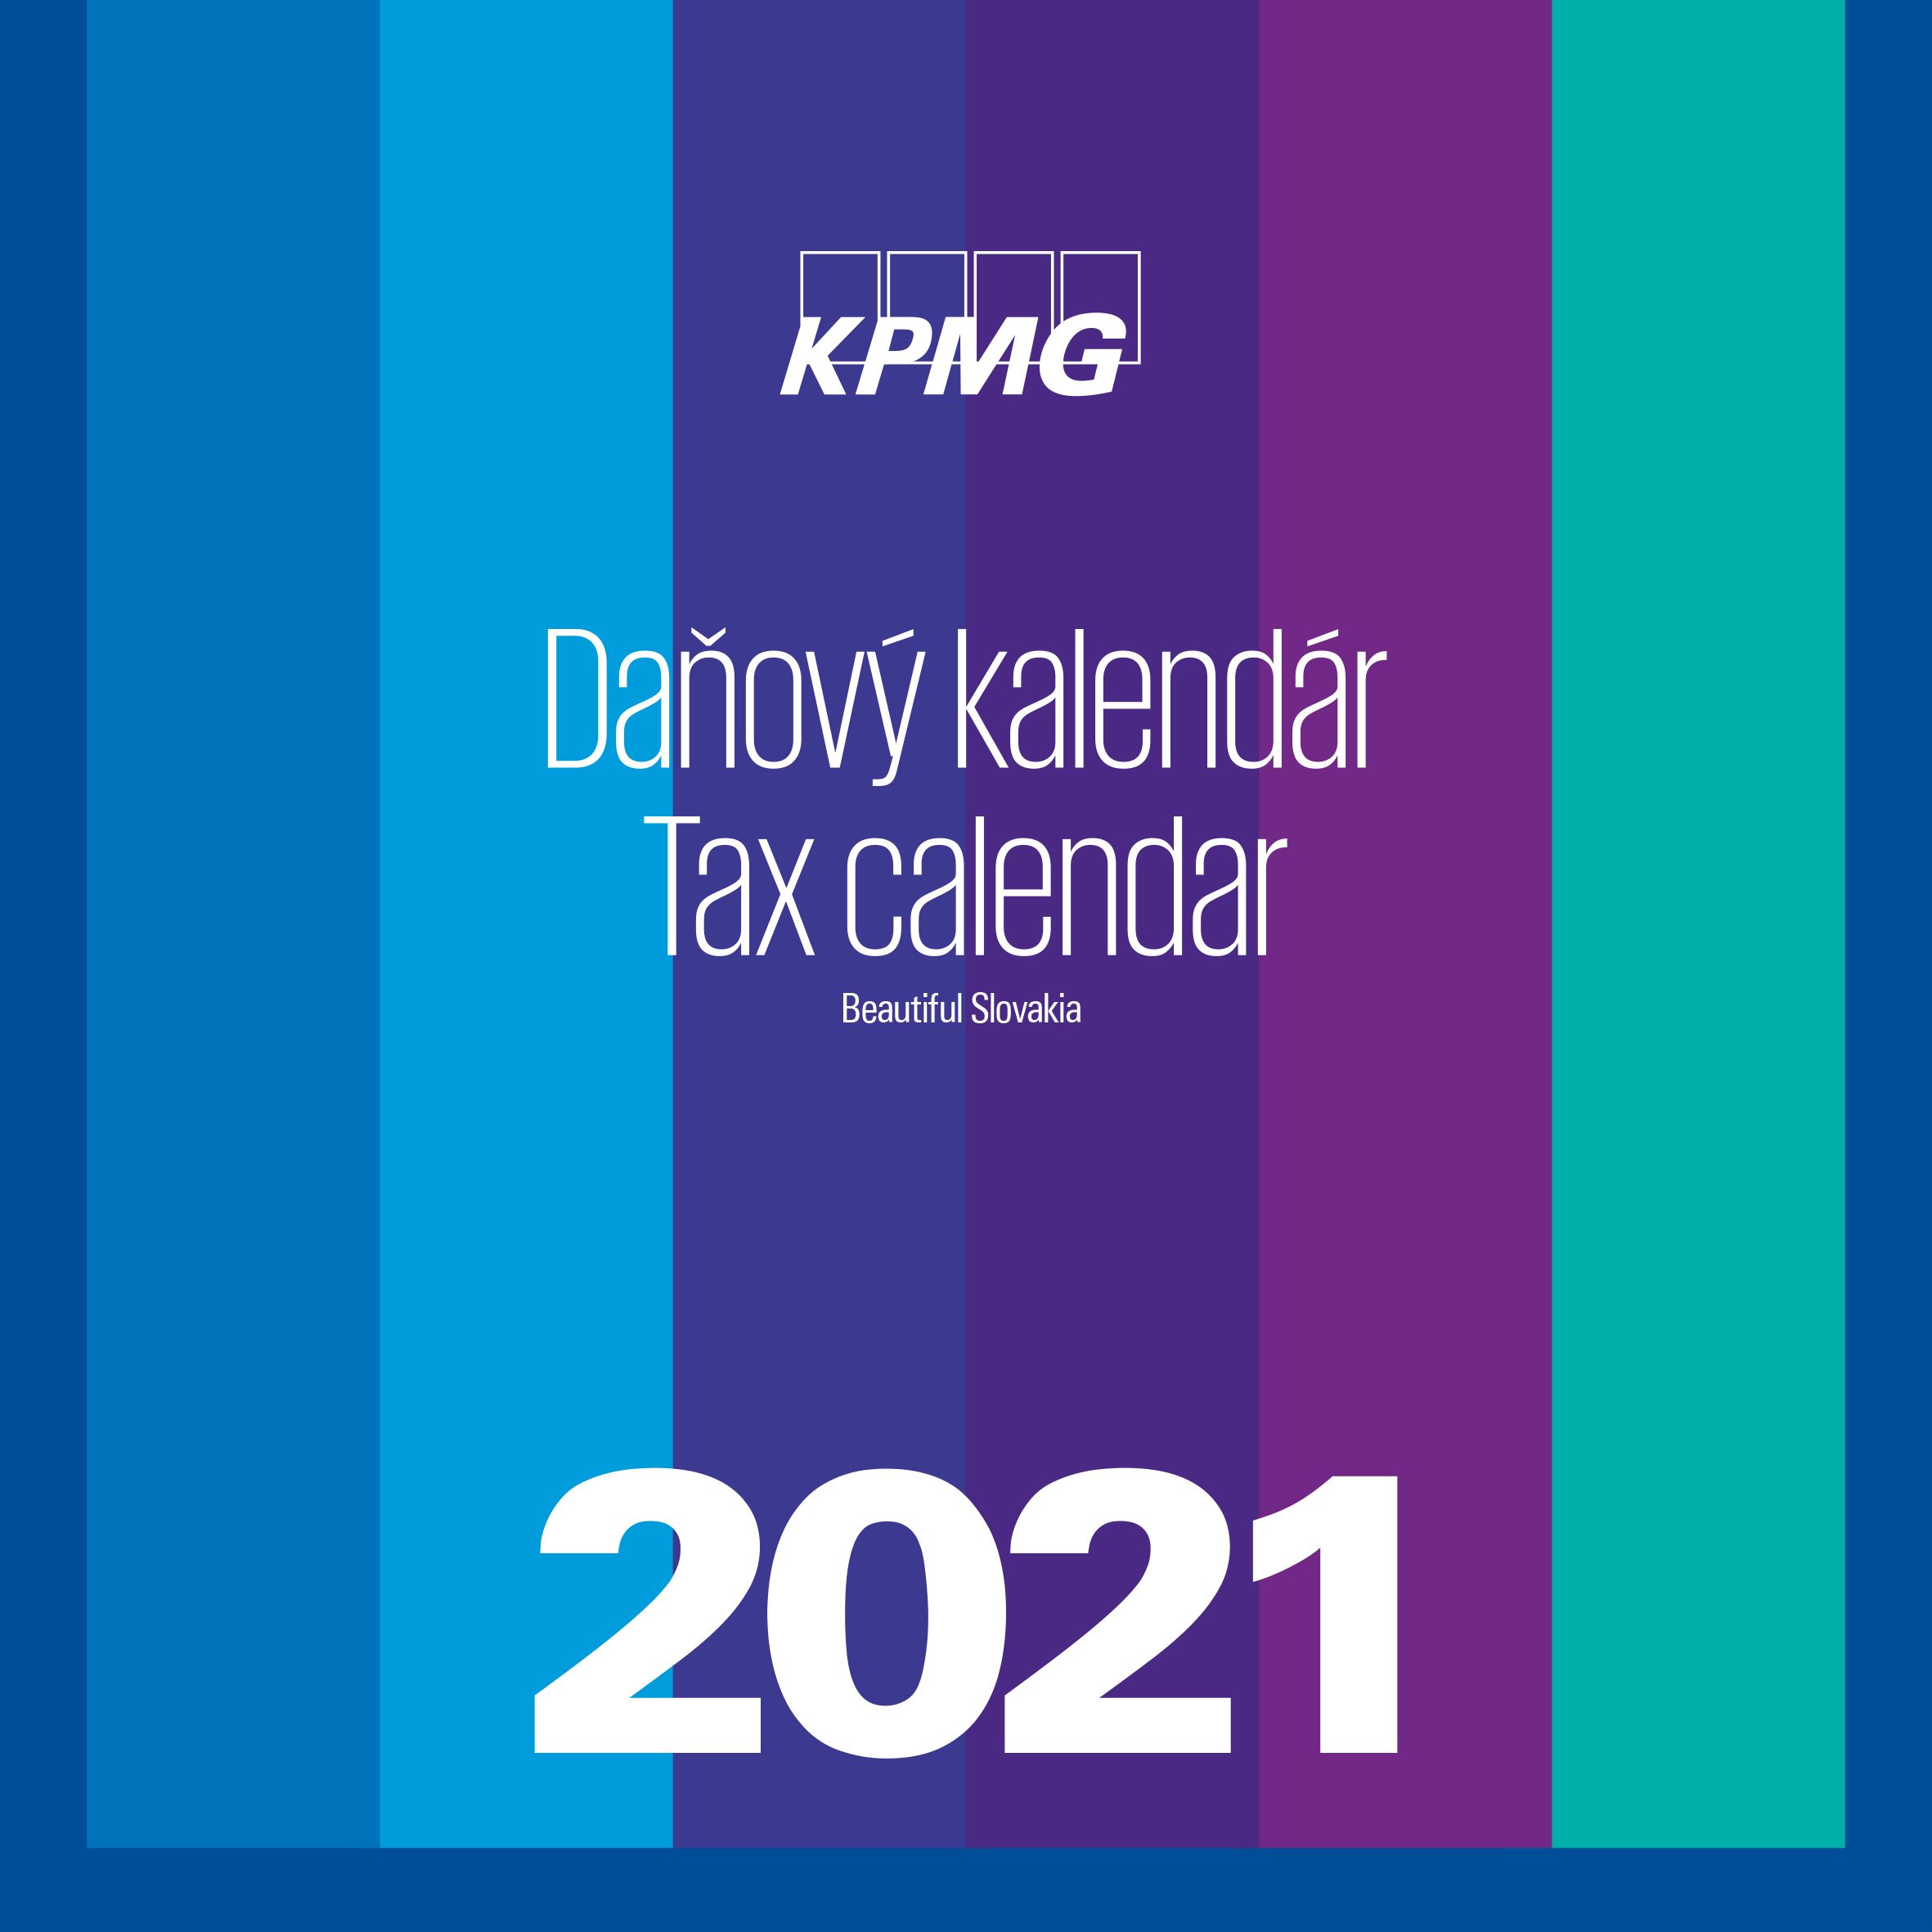 KPMG daňový kalendár